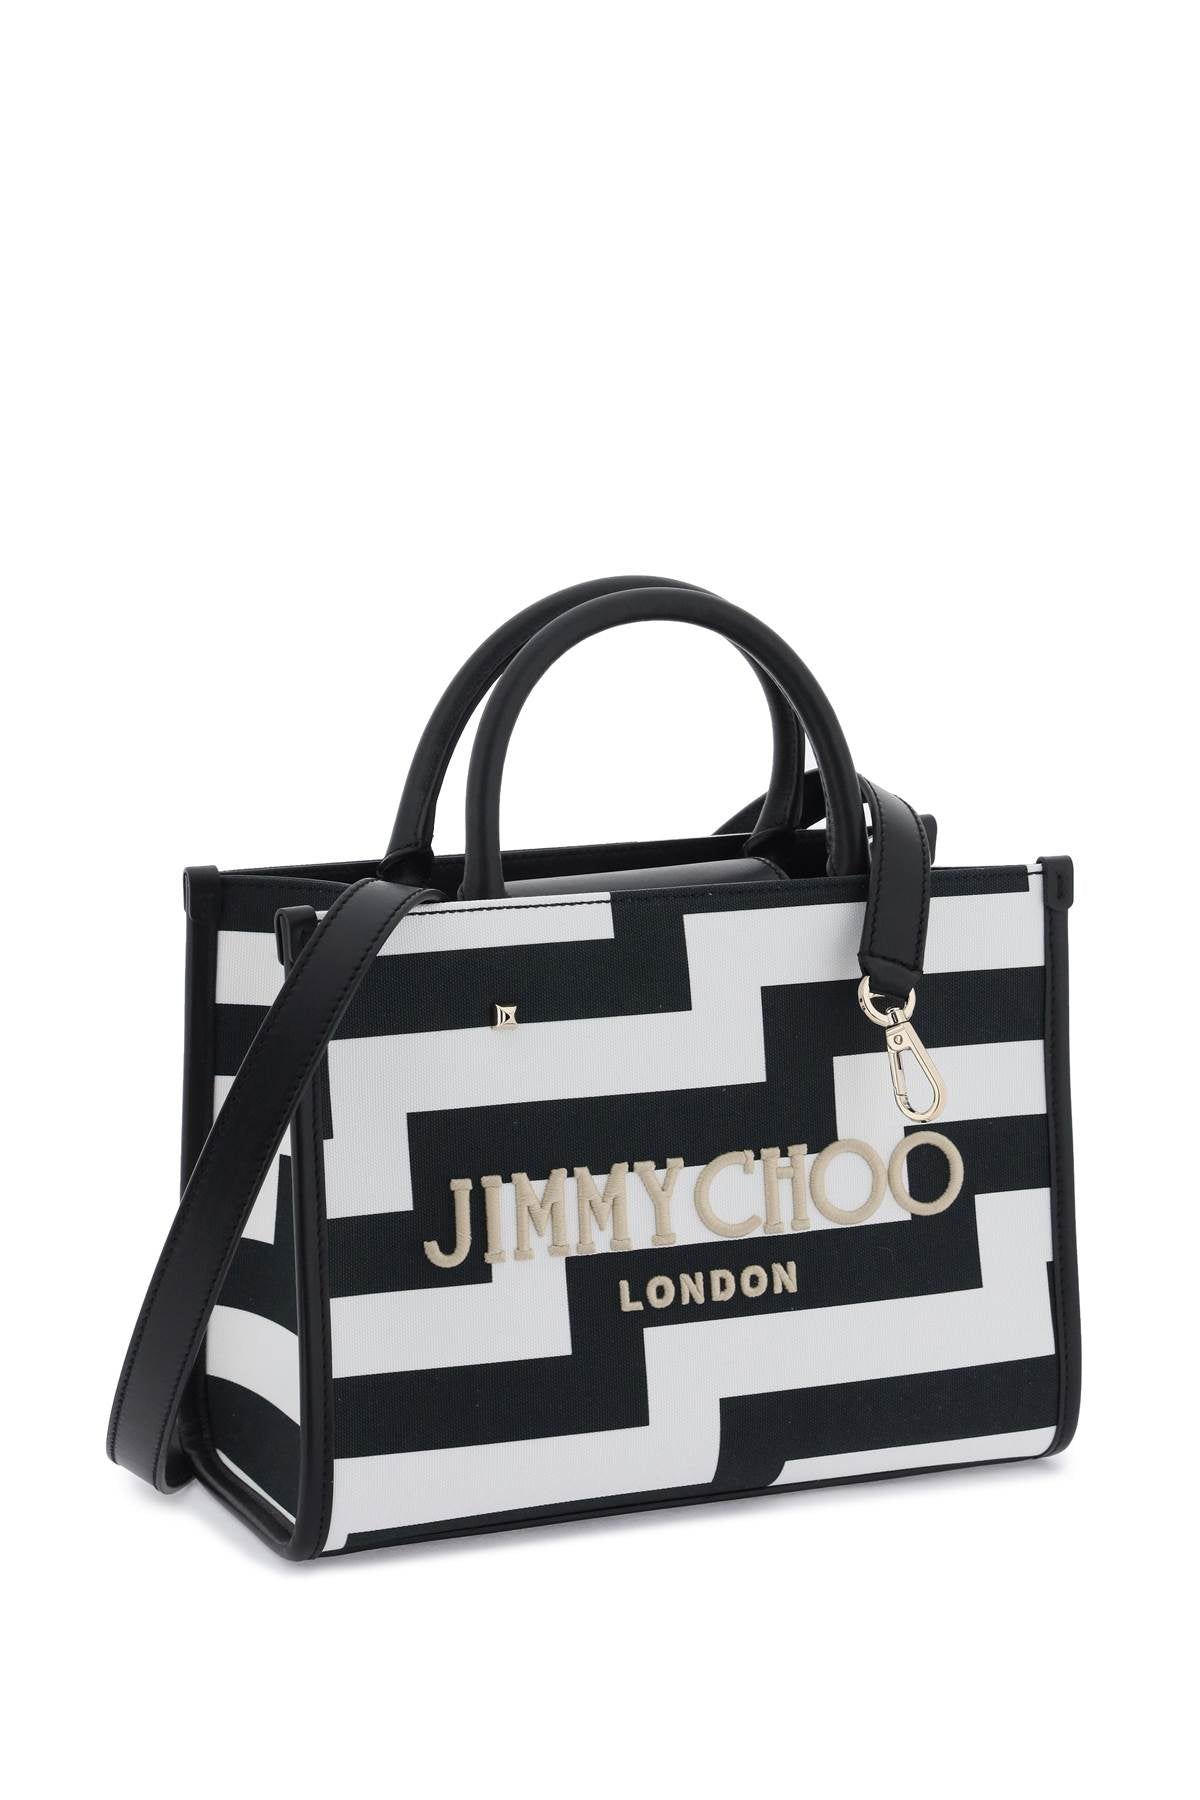 Jimmy Choo Avenue S Tote Bag Mixed Colors